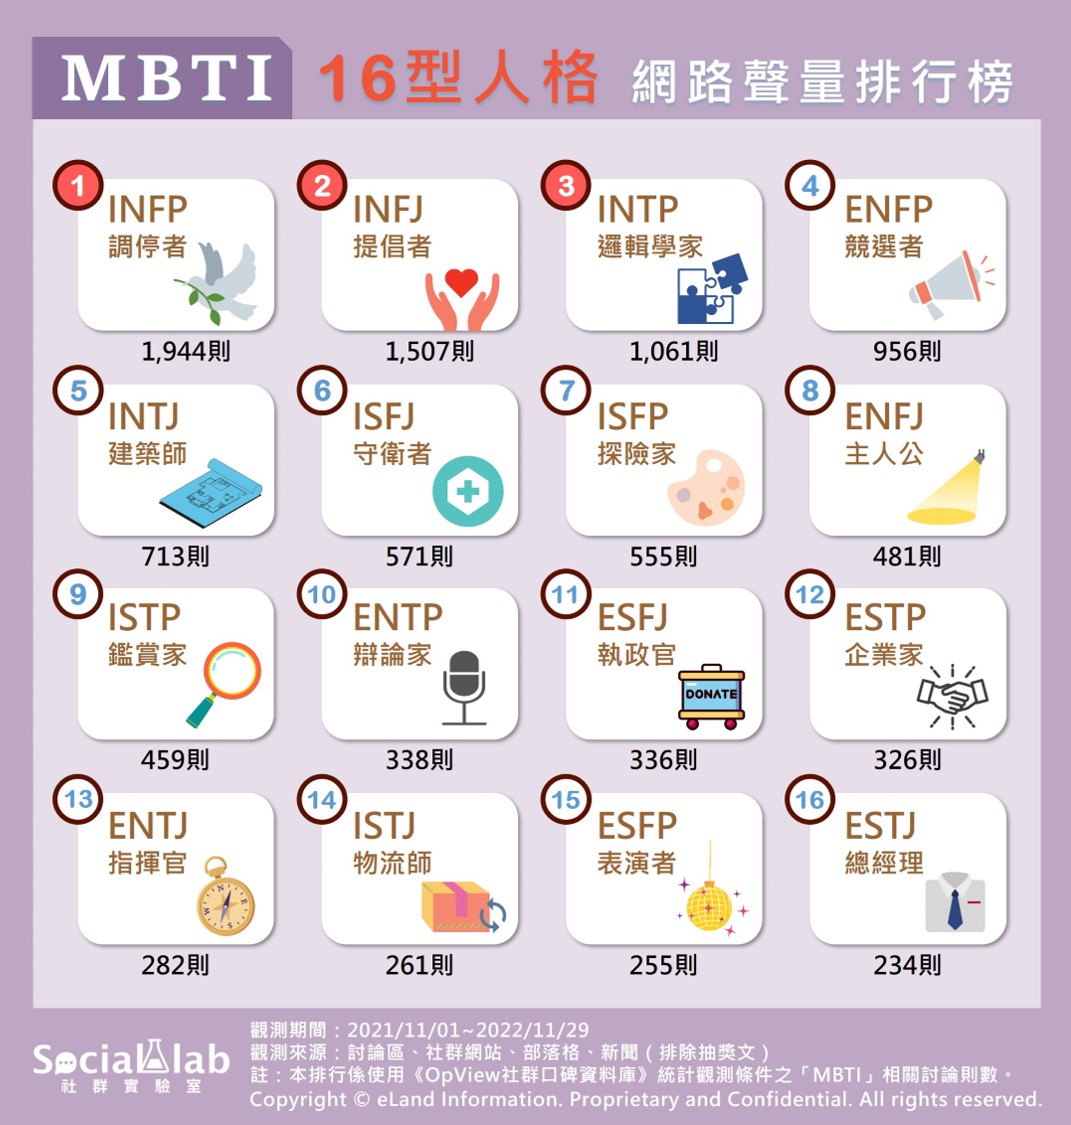 MBTI 16型人格 網路聲量排行榜